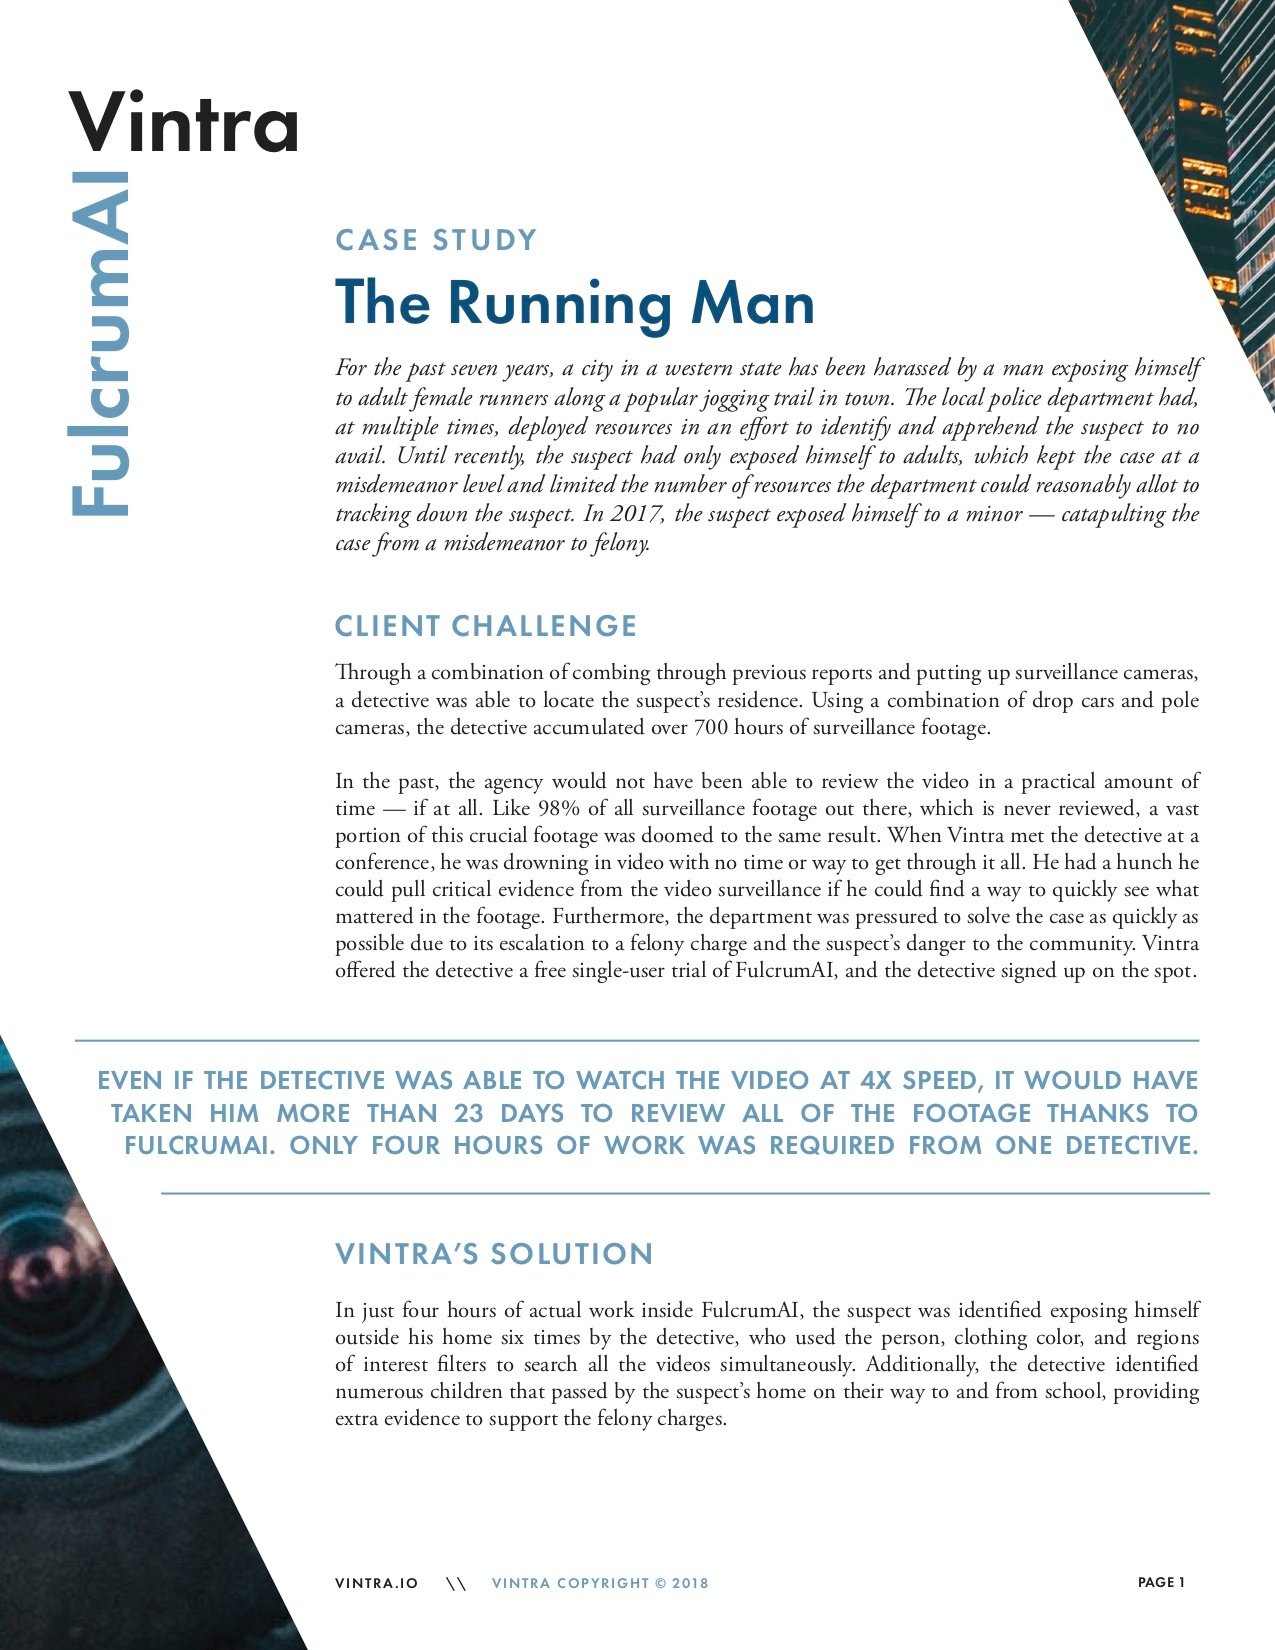 Running Man case study